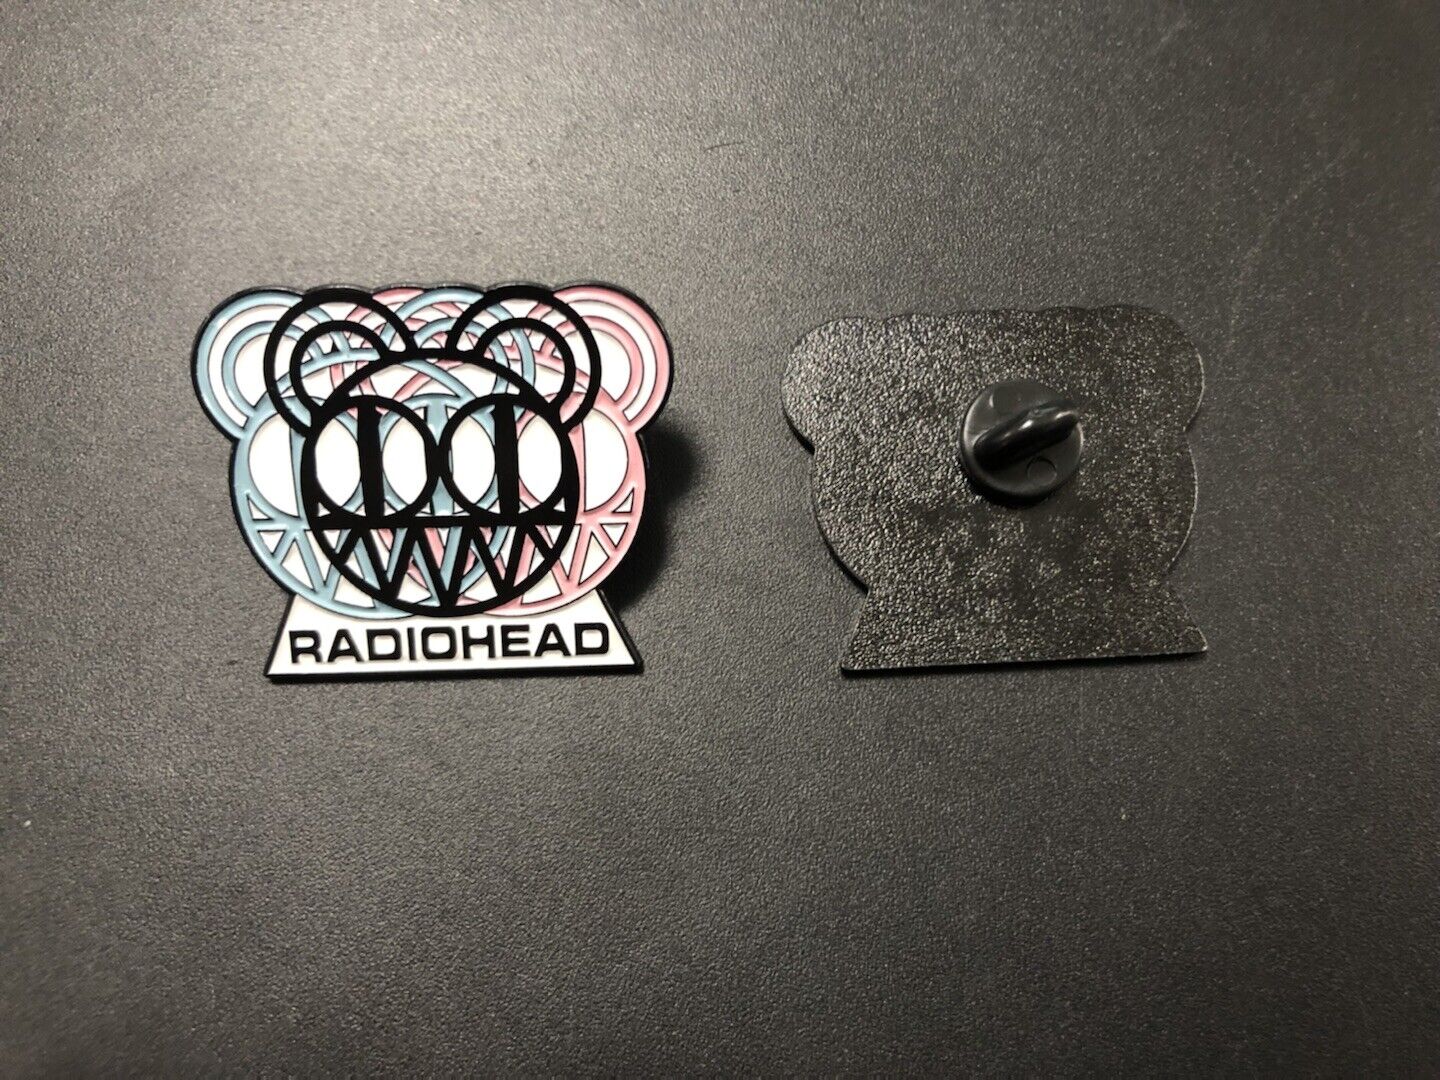 Radiohead enamel Pin Lapel - Creep Ok Computer - Electronic alternative rock 90s